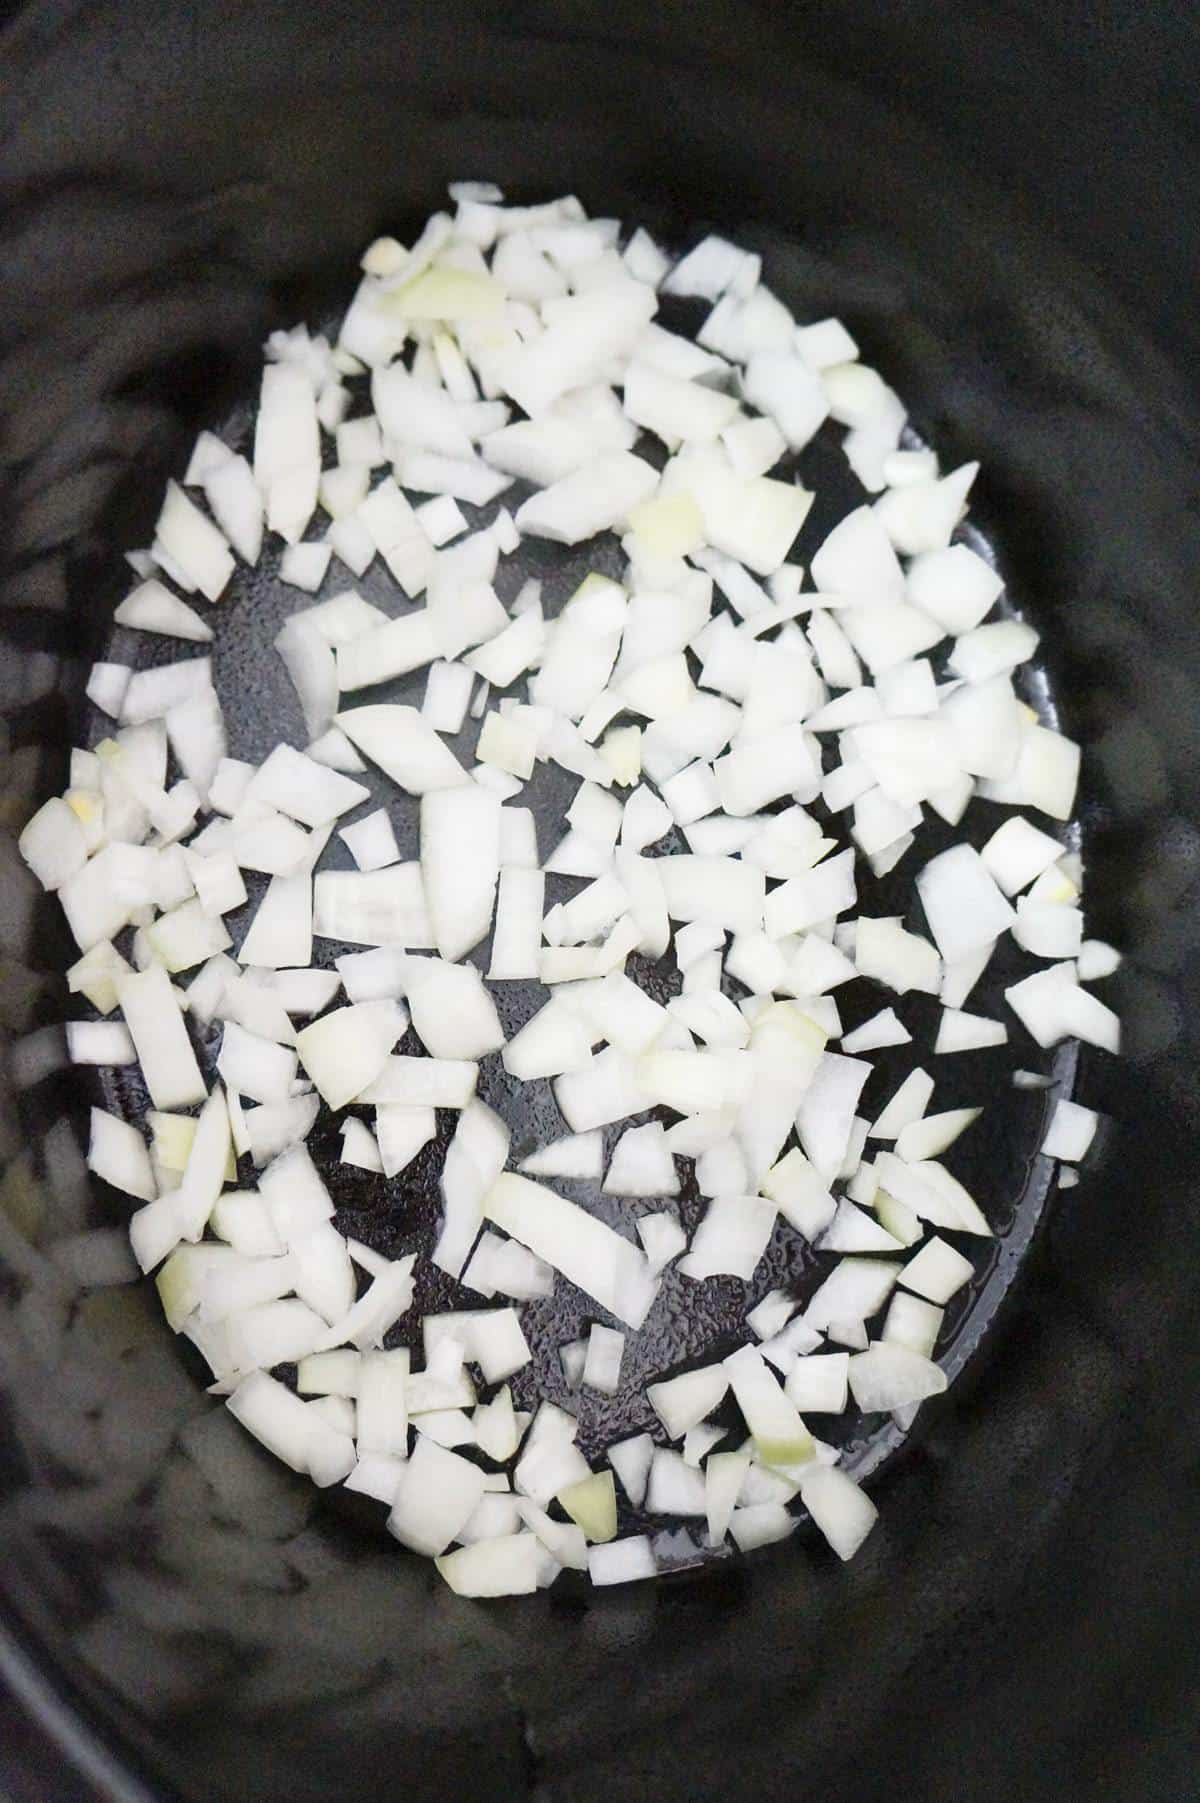 diced onions in a crock pot.